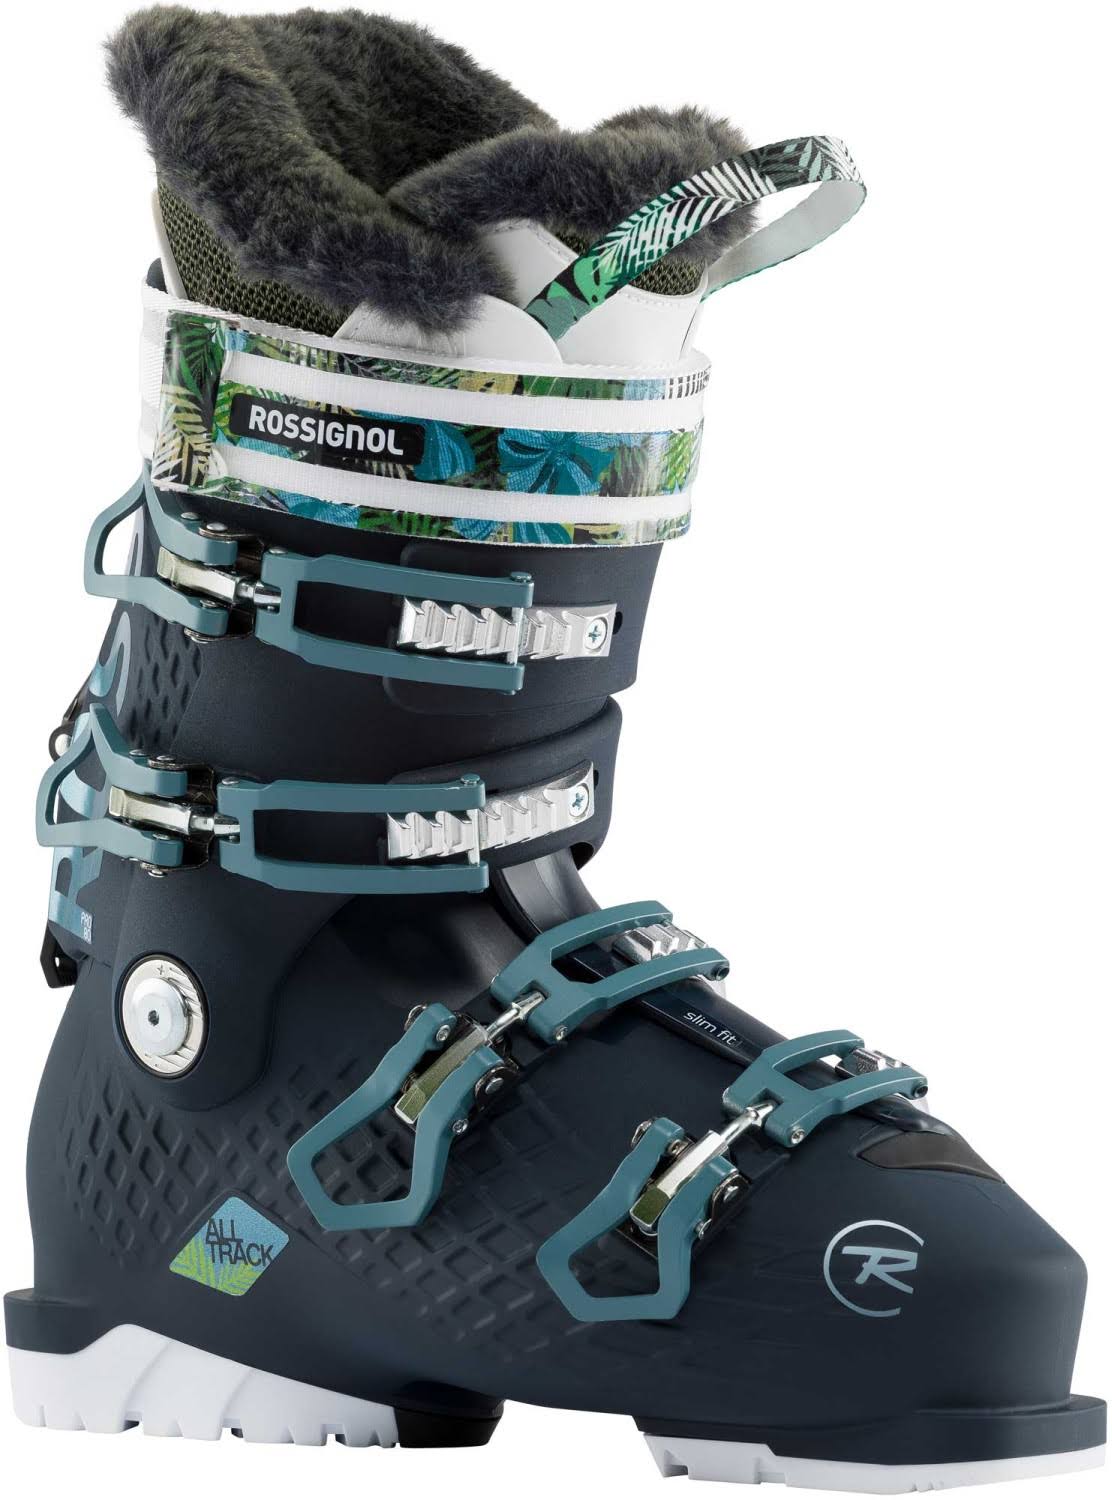 Rossignol alltrack pro 80 (dark blue) women's ski boots